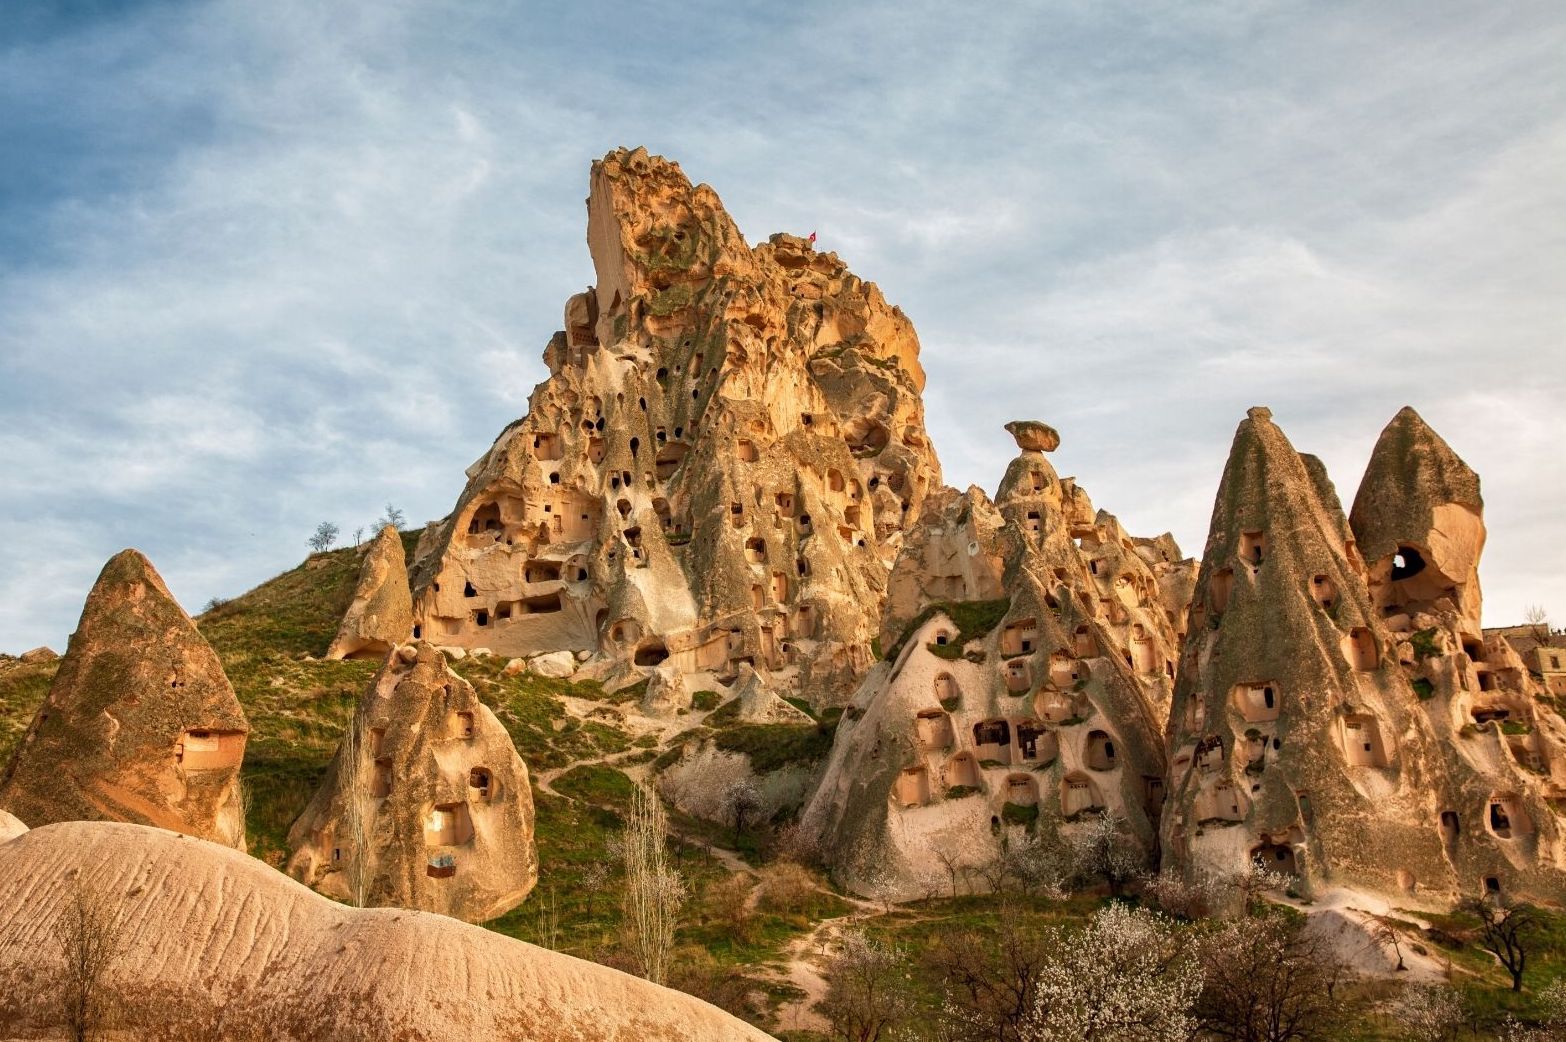 Cappadocia's "fairytale chimney" rock formations in Turkey.